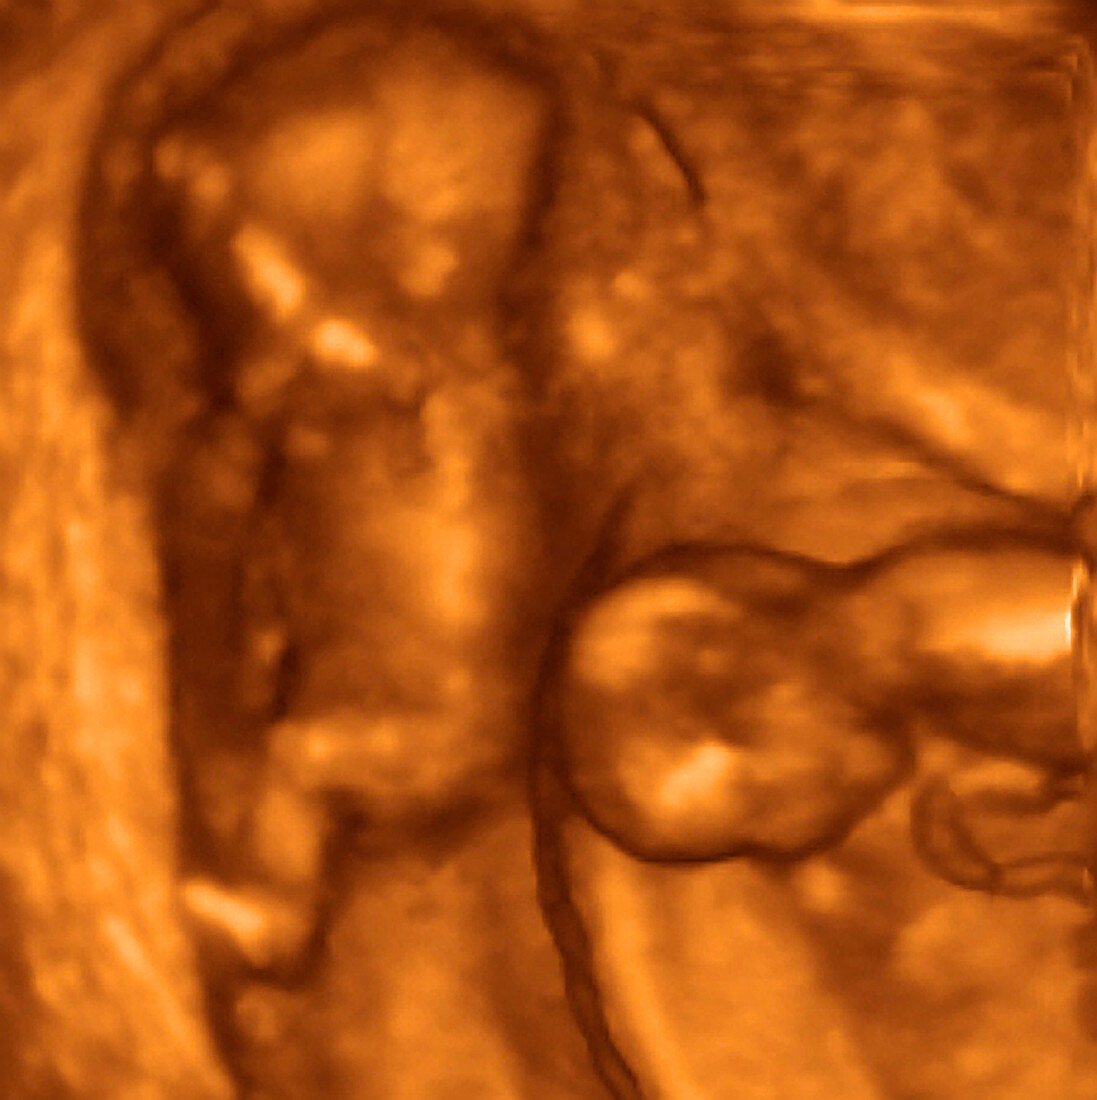 16 week twins,3-D ultrasound scan